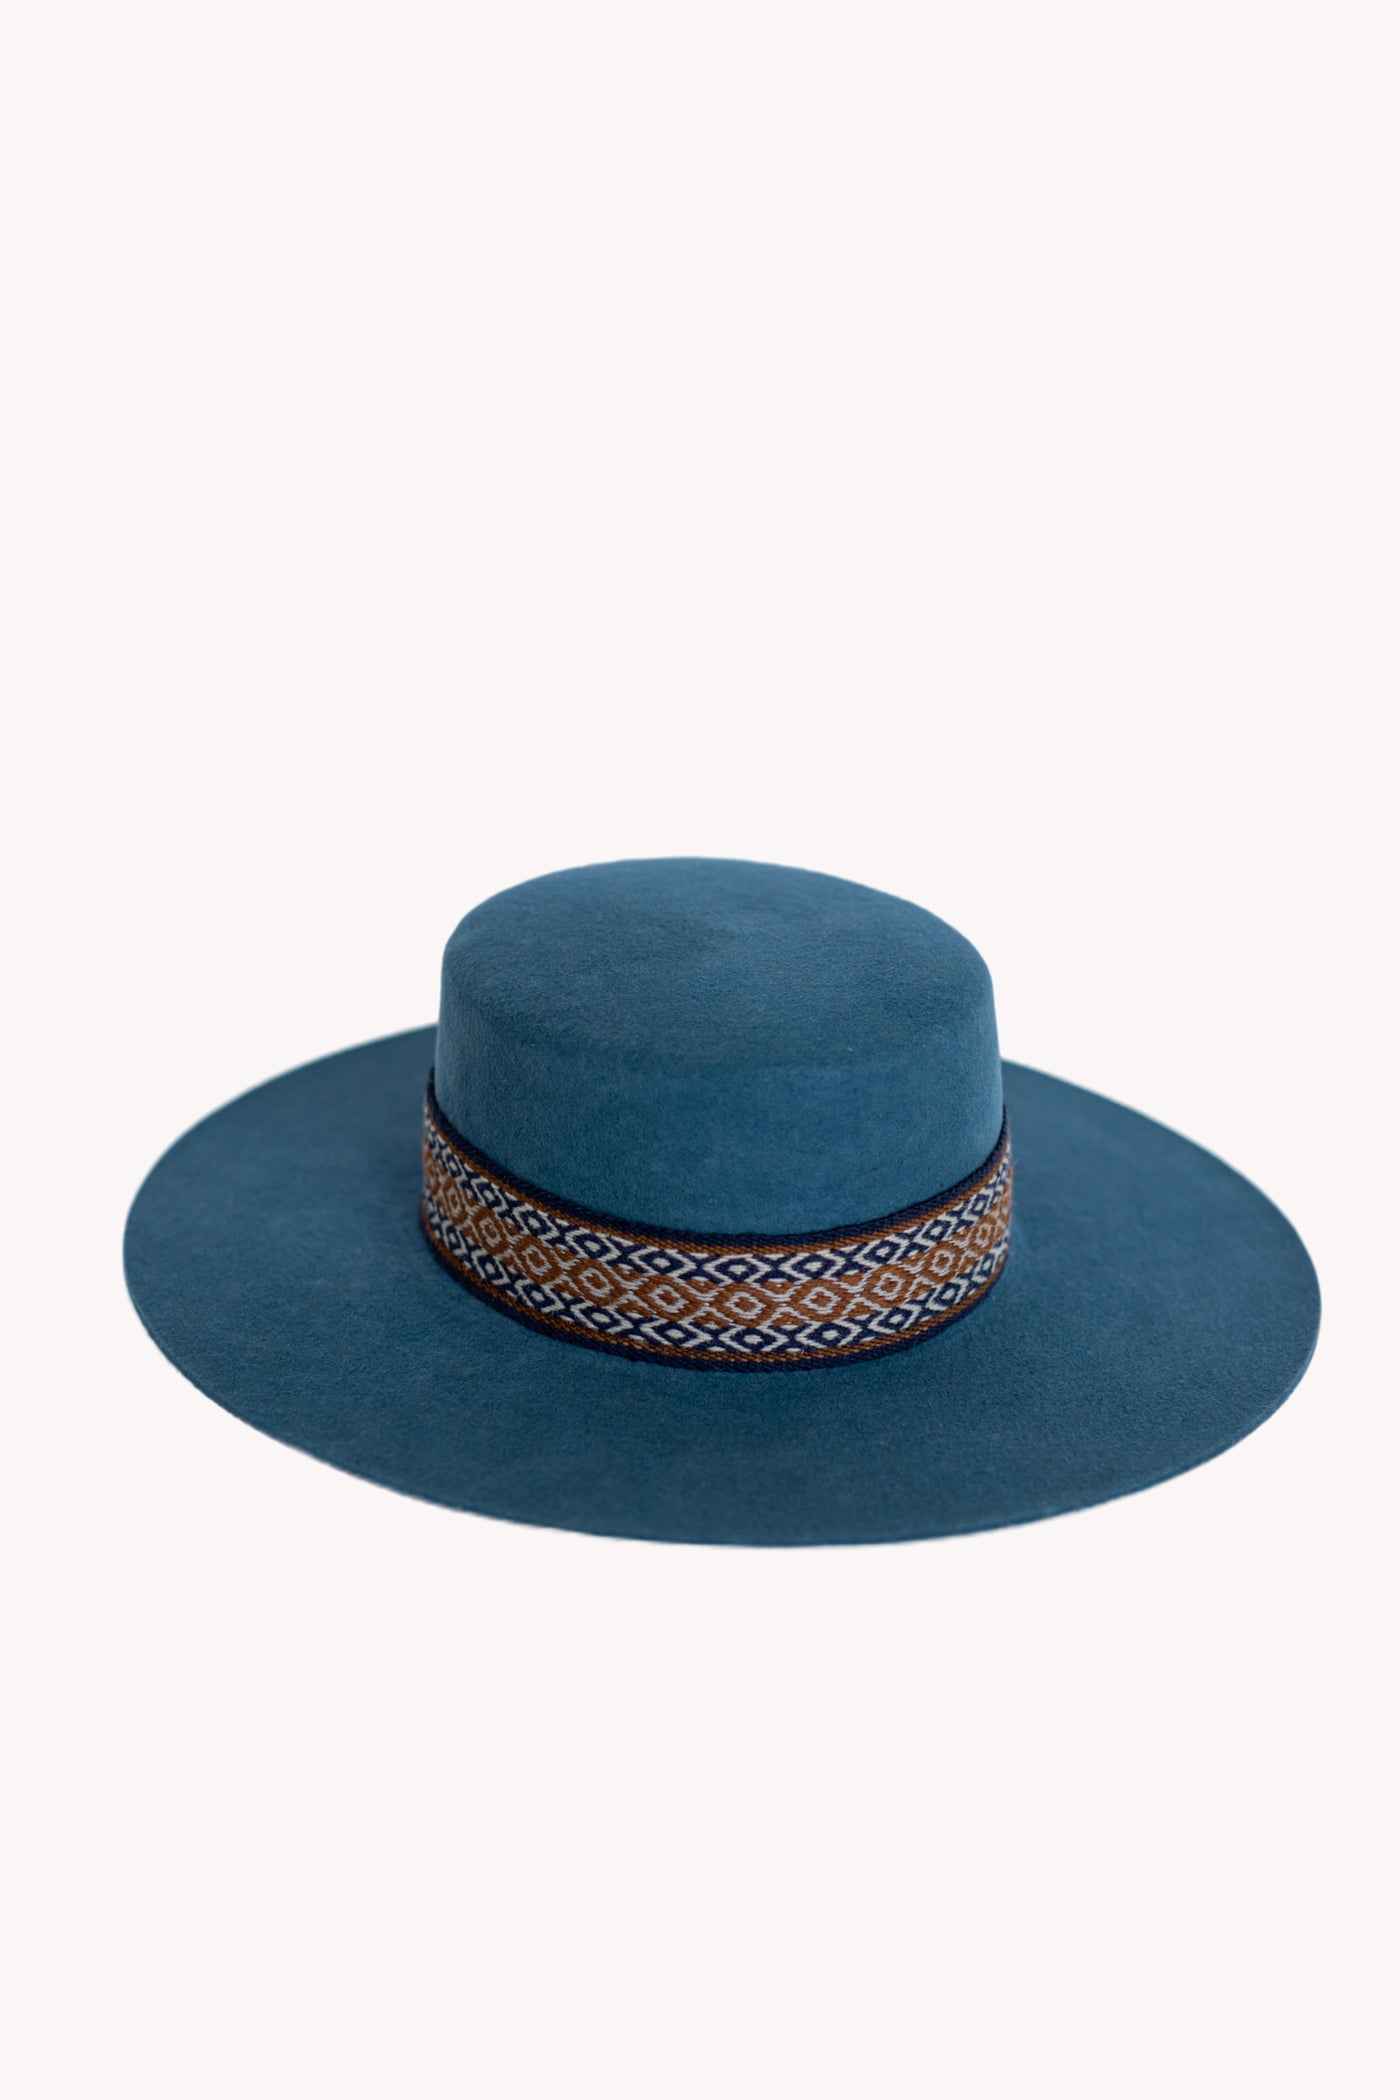 Blue Spanish style high fashion hat